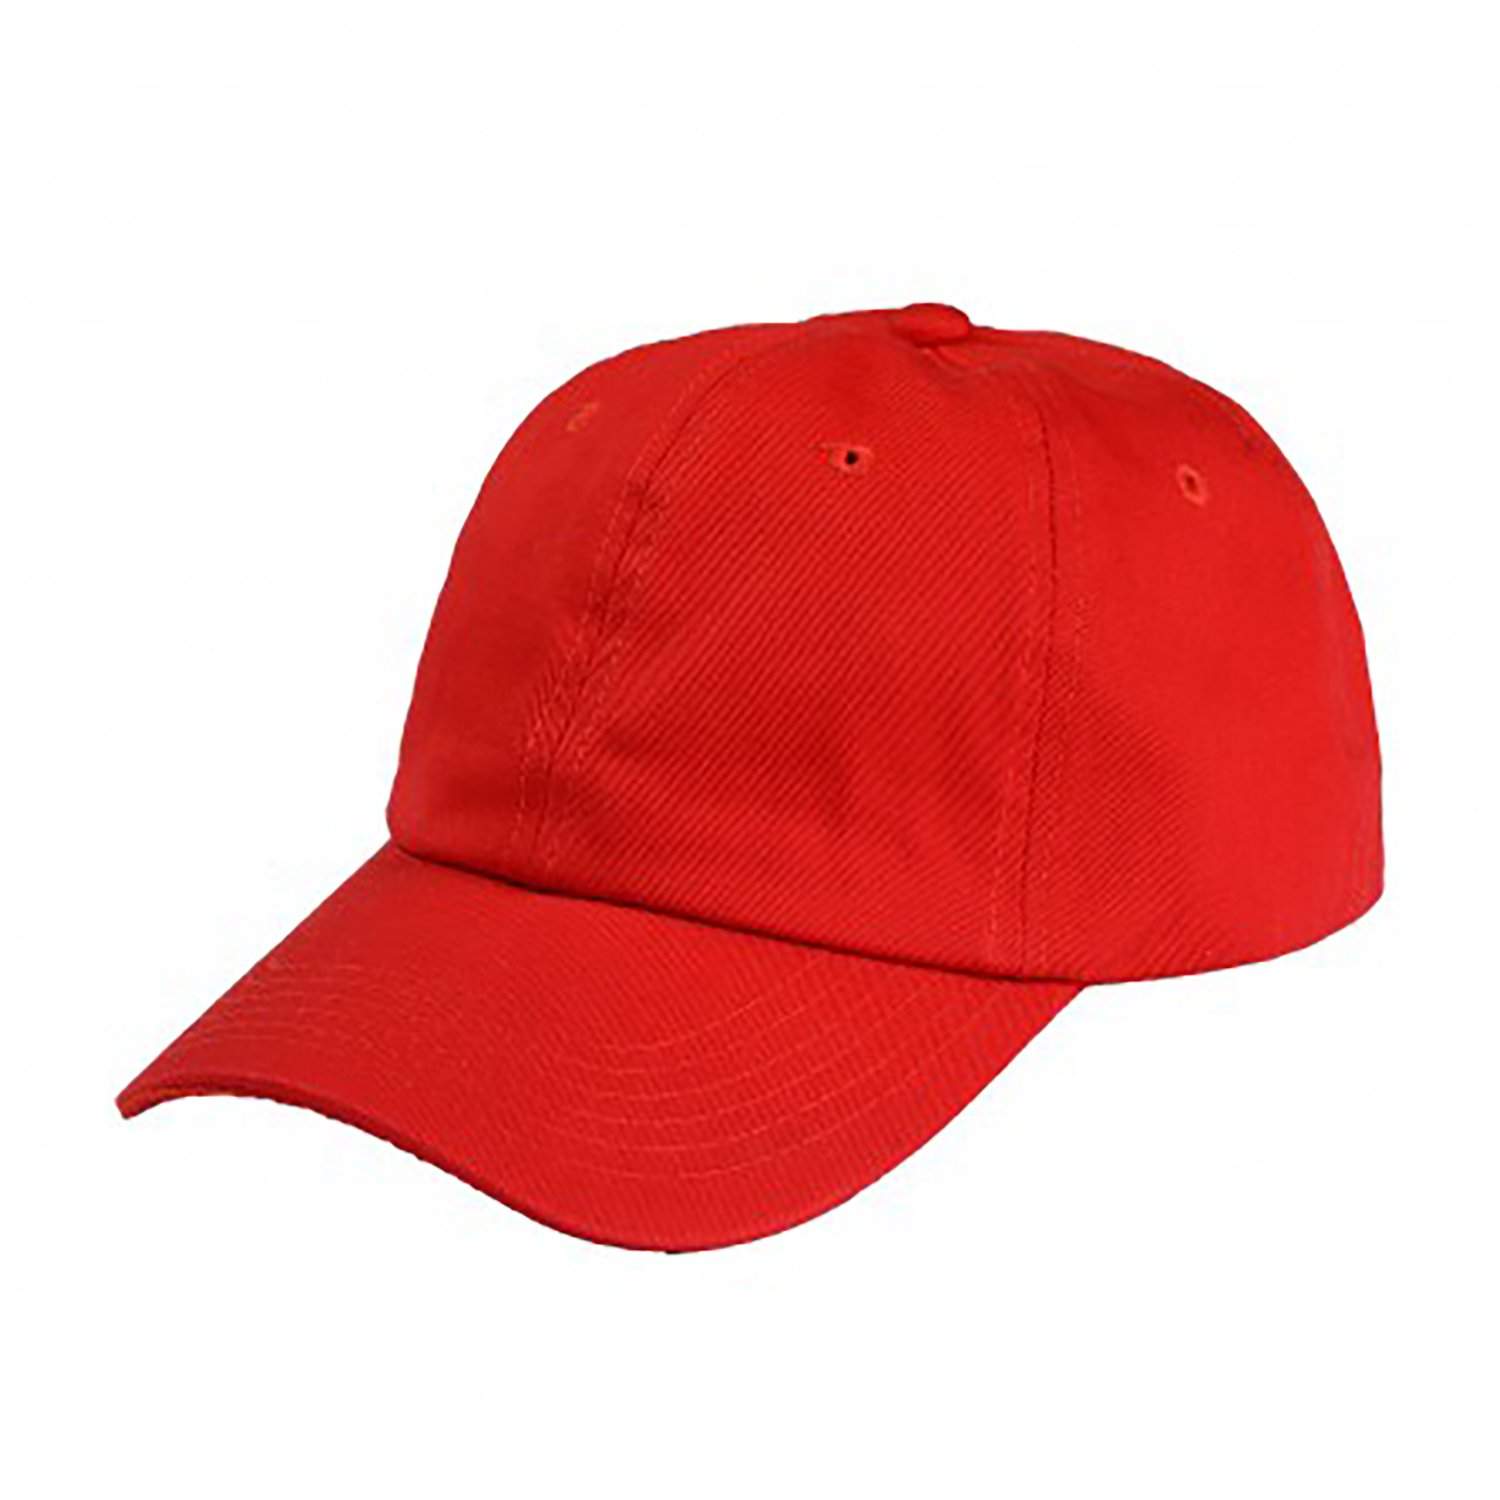 Mechaly Cotton Dad Hat Adjustable Cap